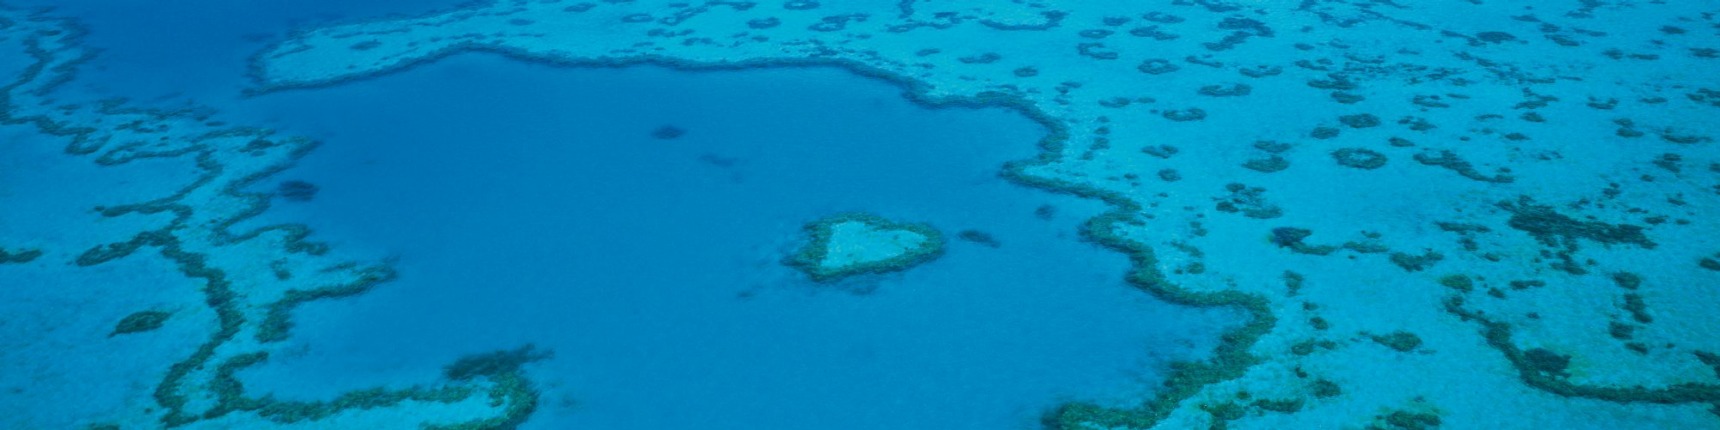 Whitsundays reef australia